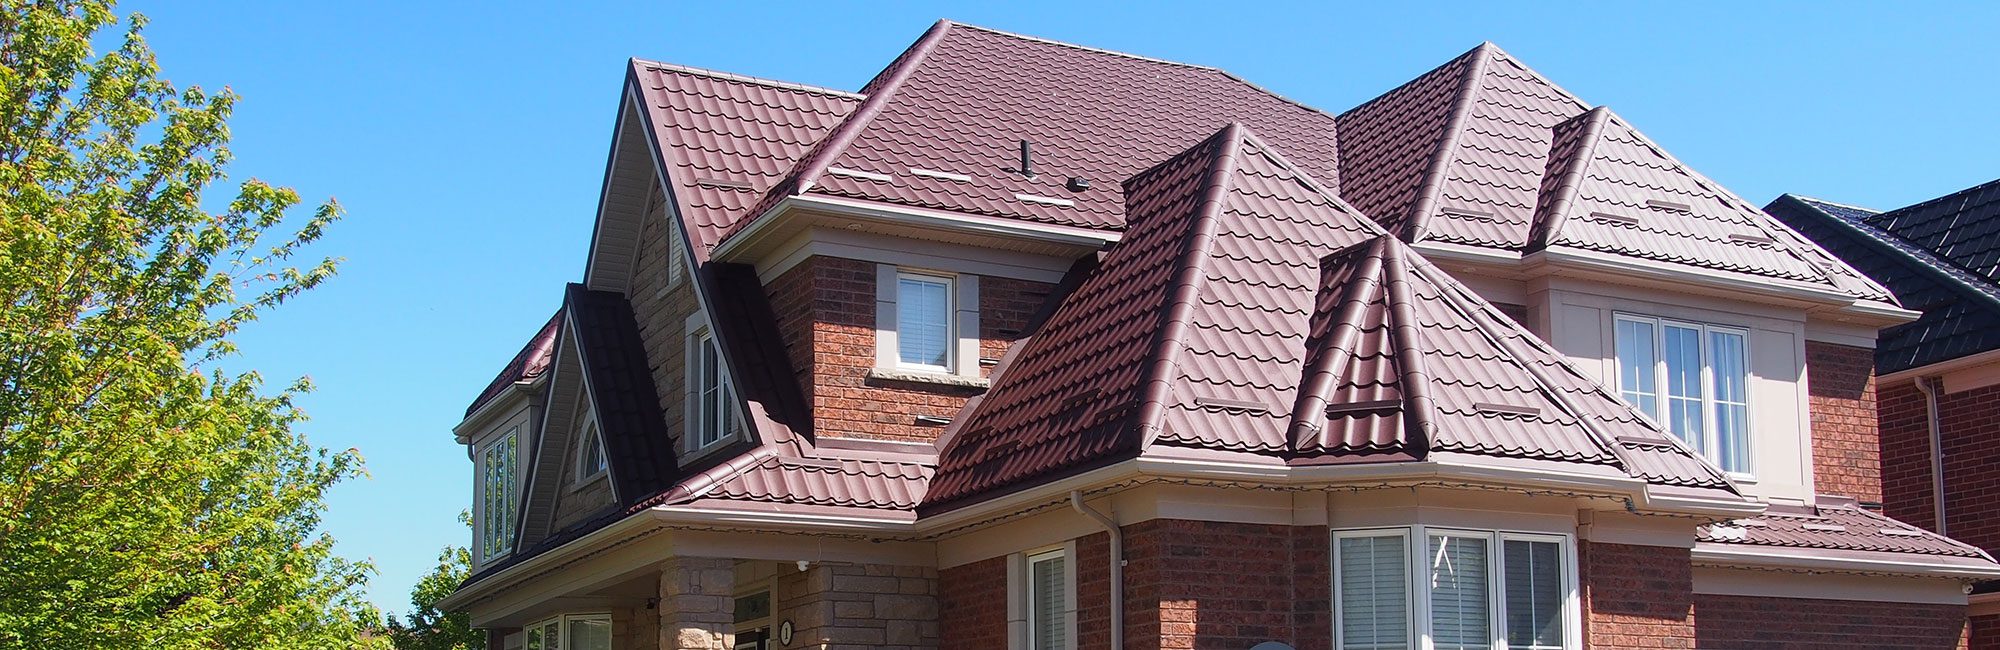 Metal Roofing Installation in Ajax, Ontario.